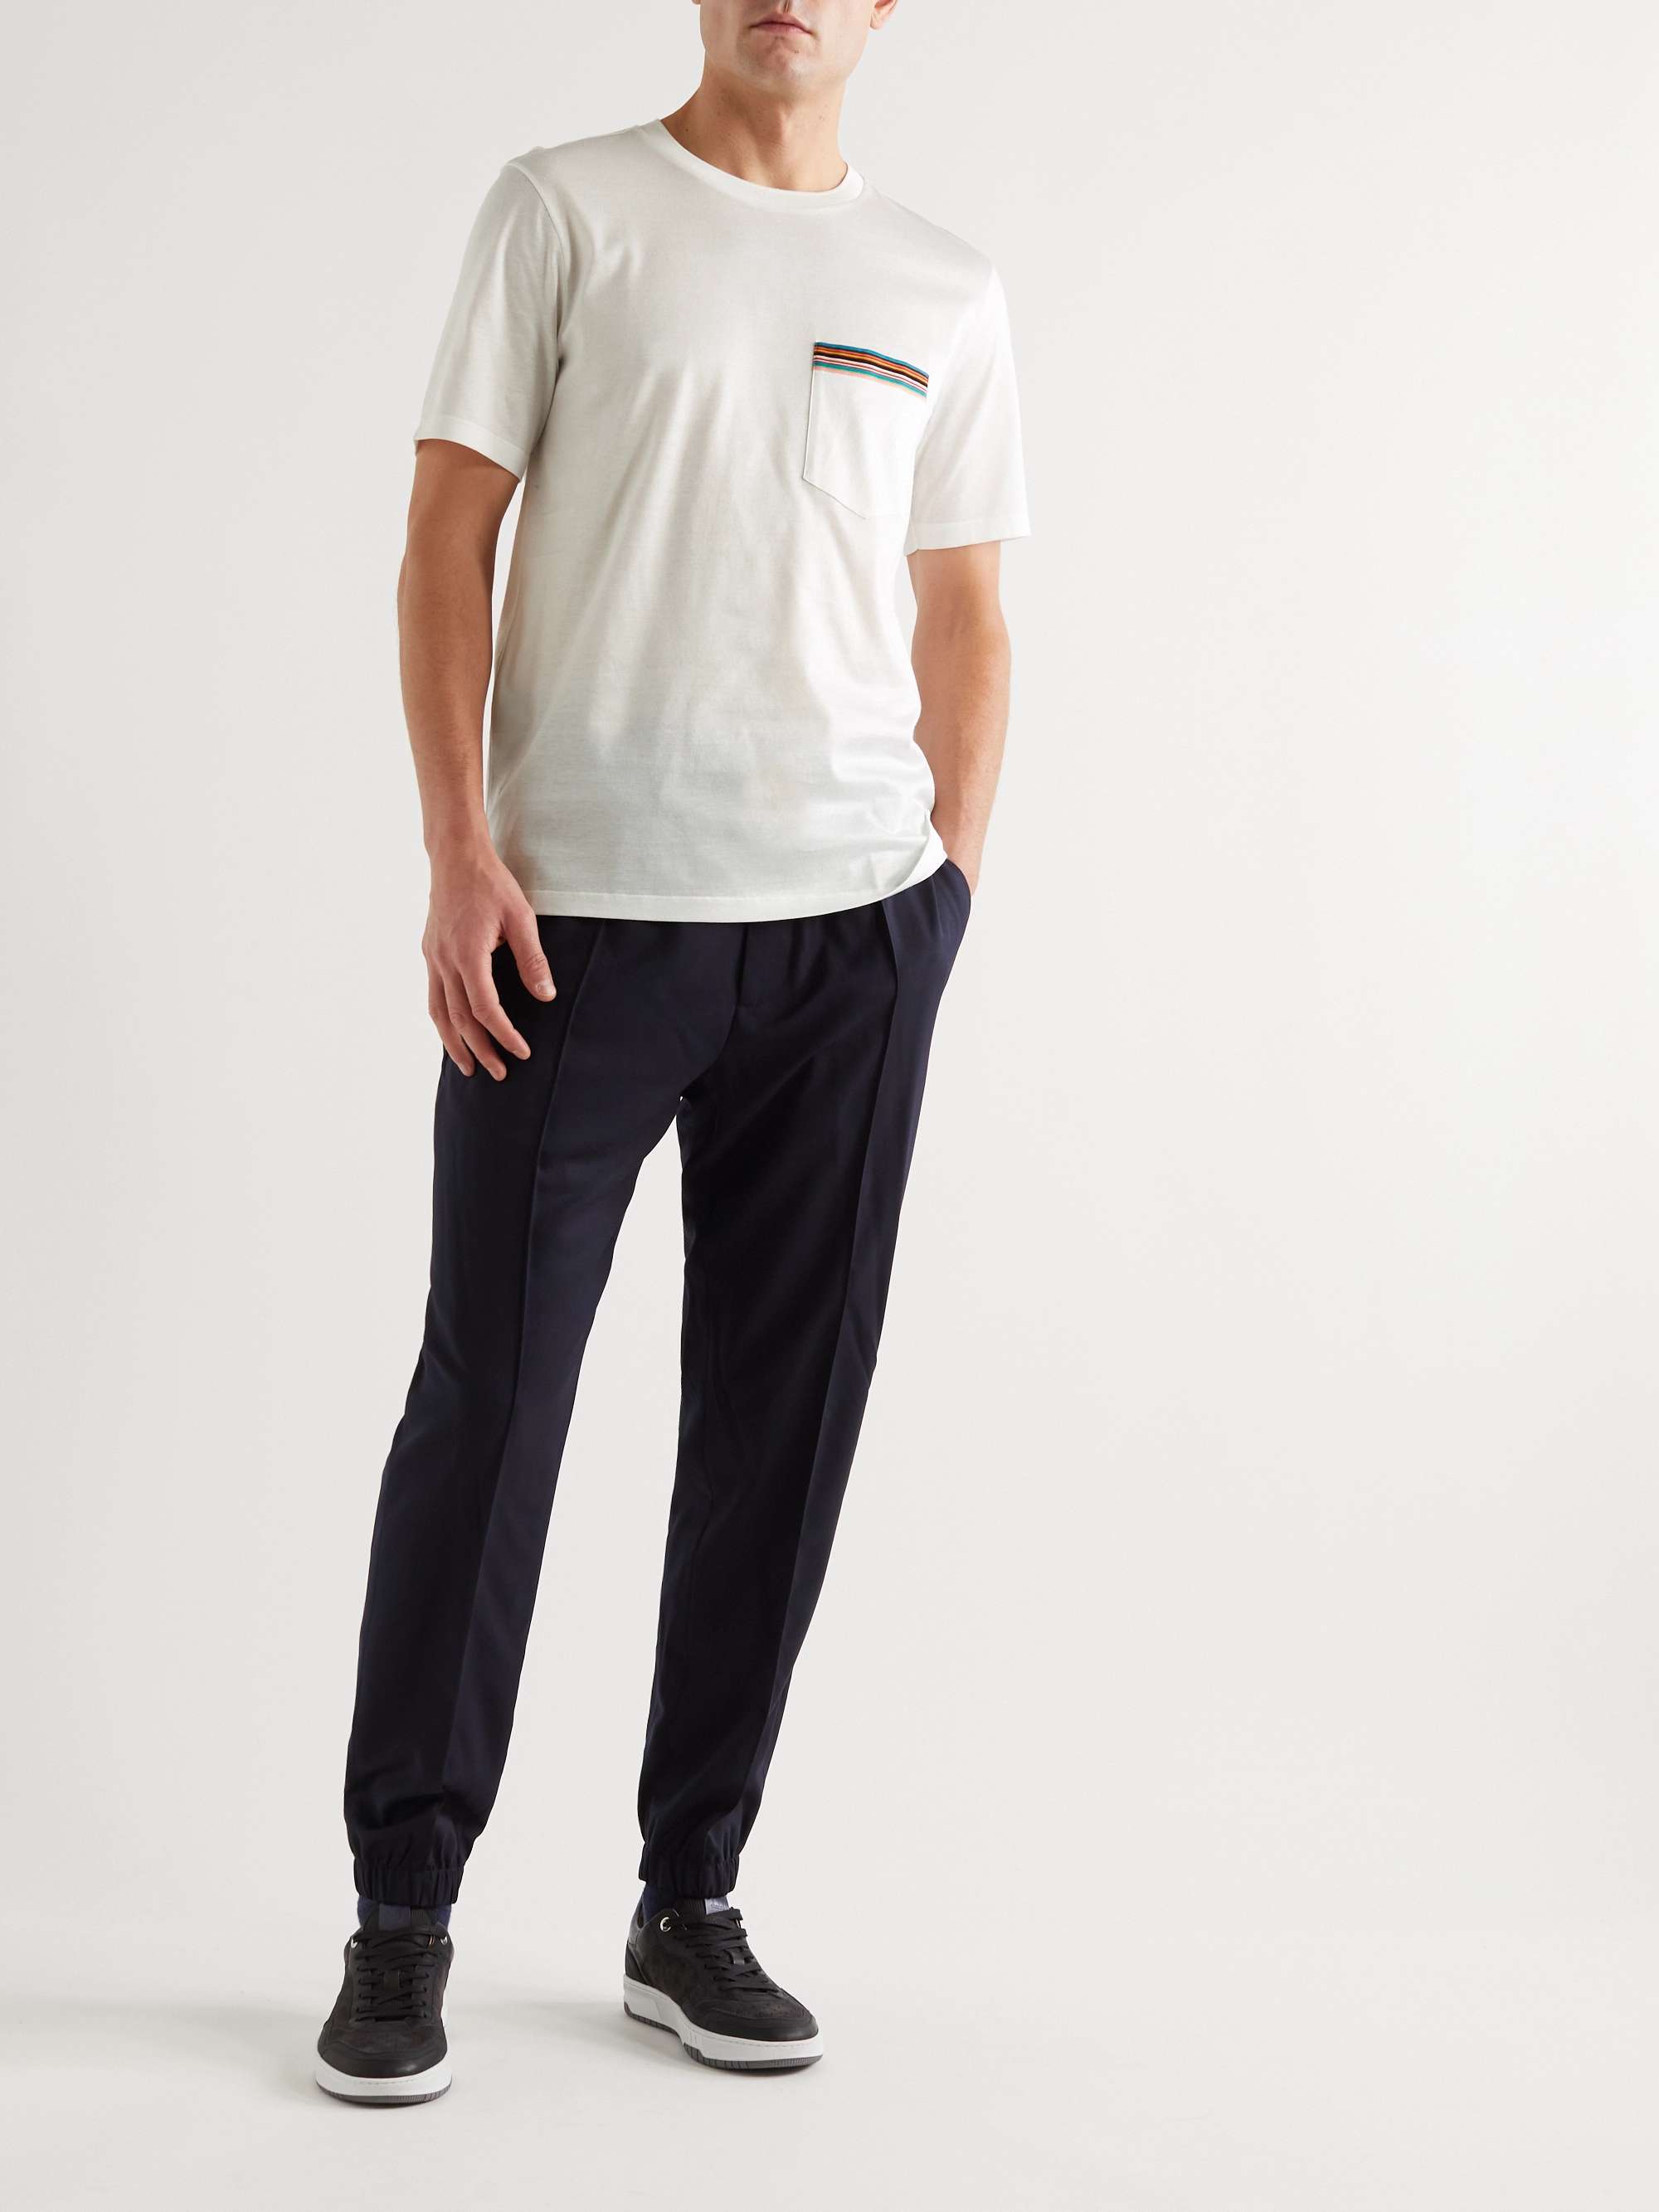 PAUL SMITH Striped Cotton-Jersey T-Shirt